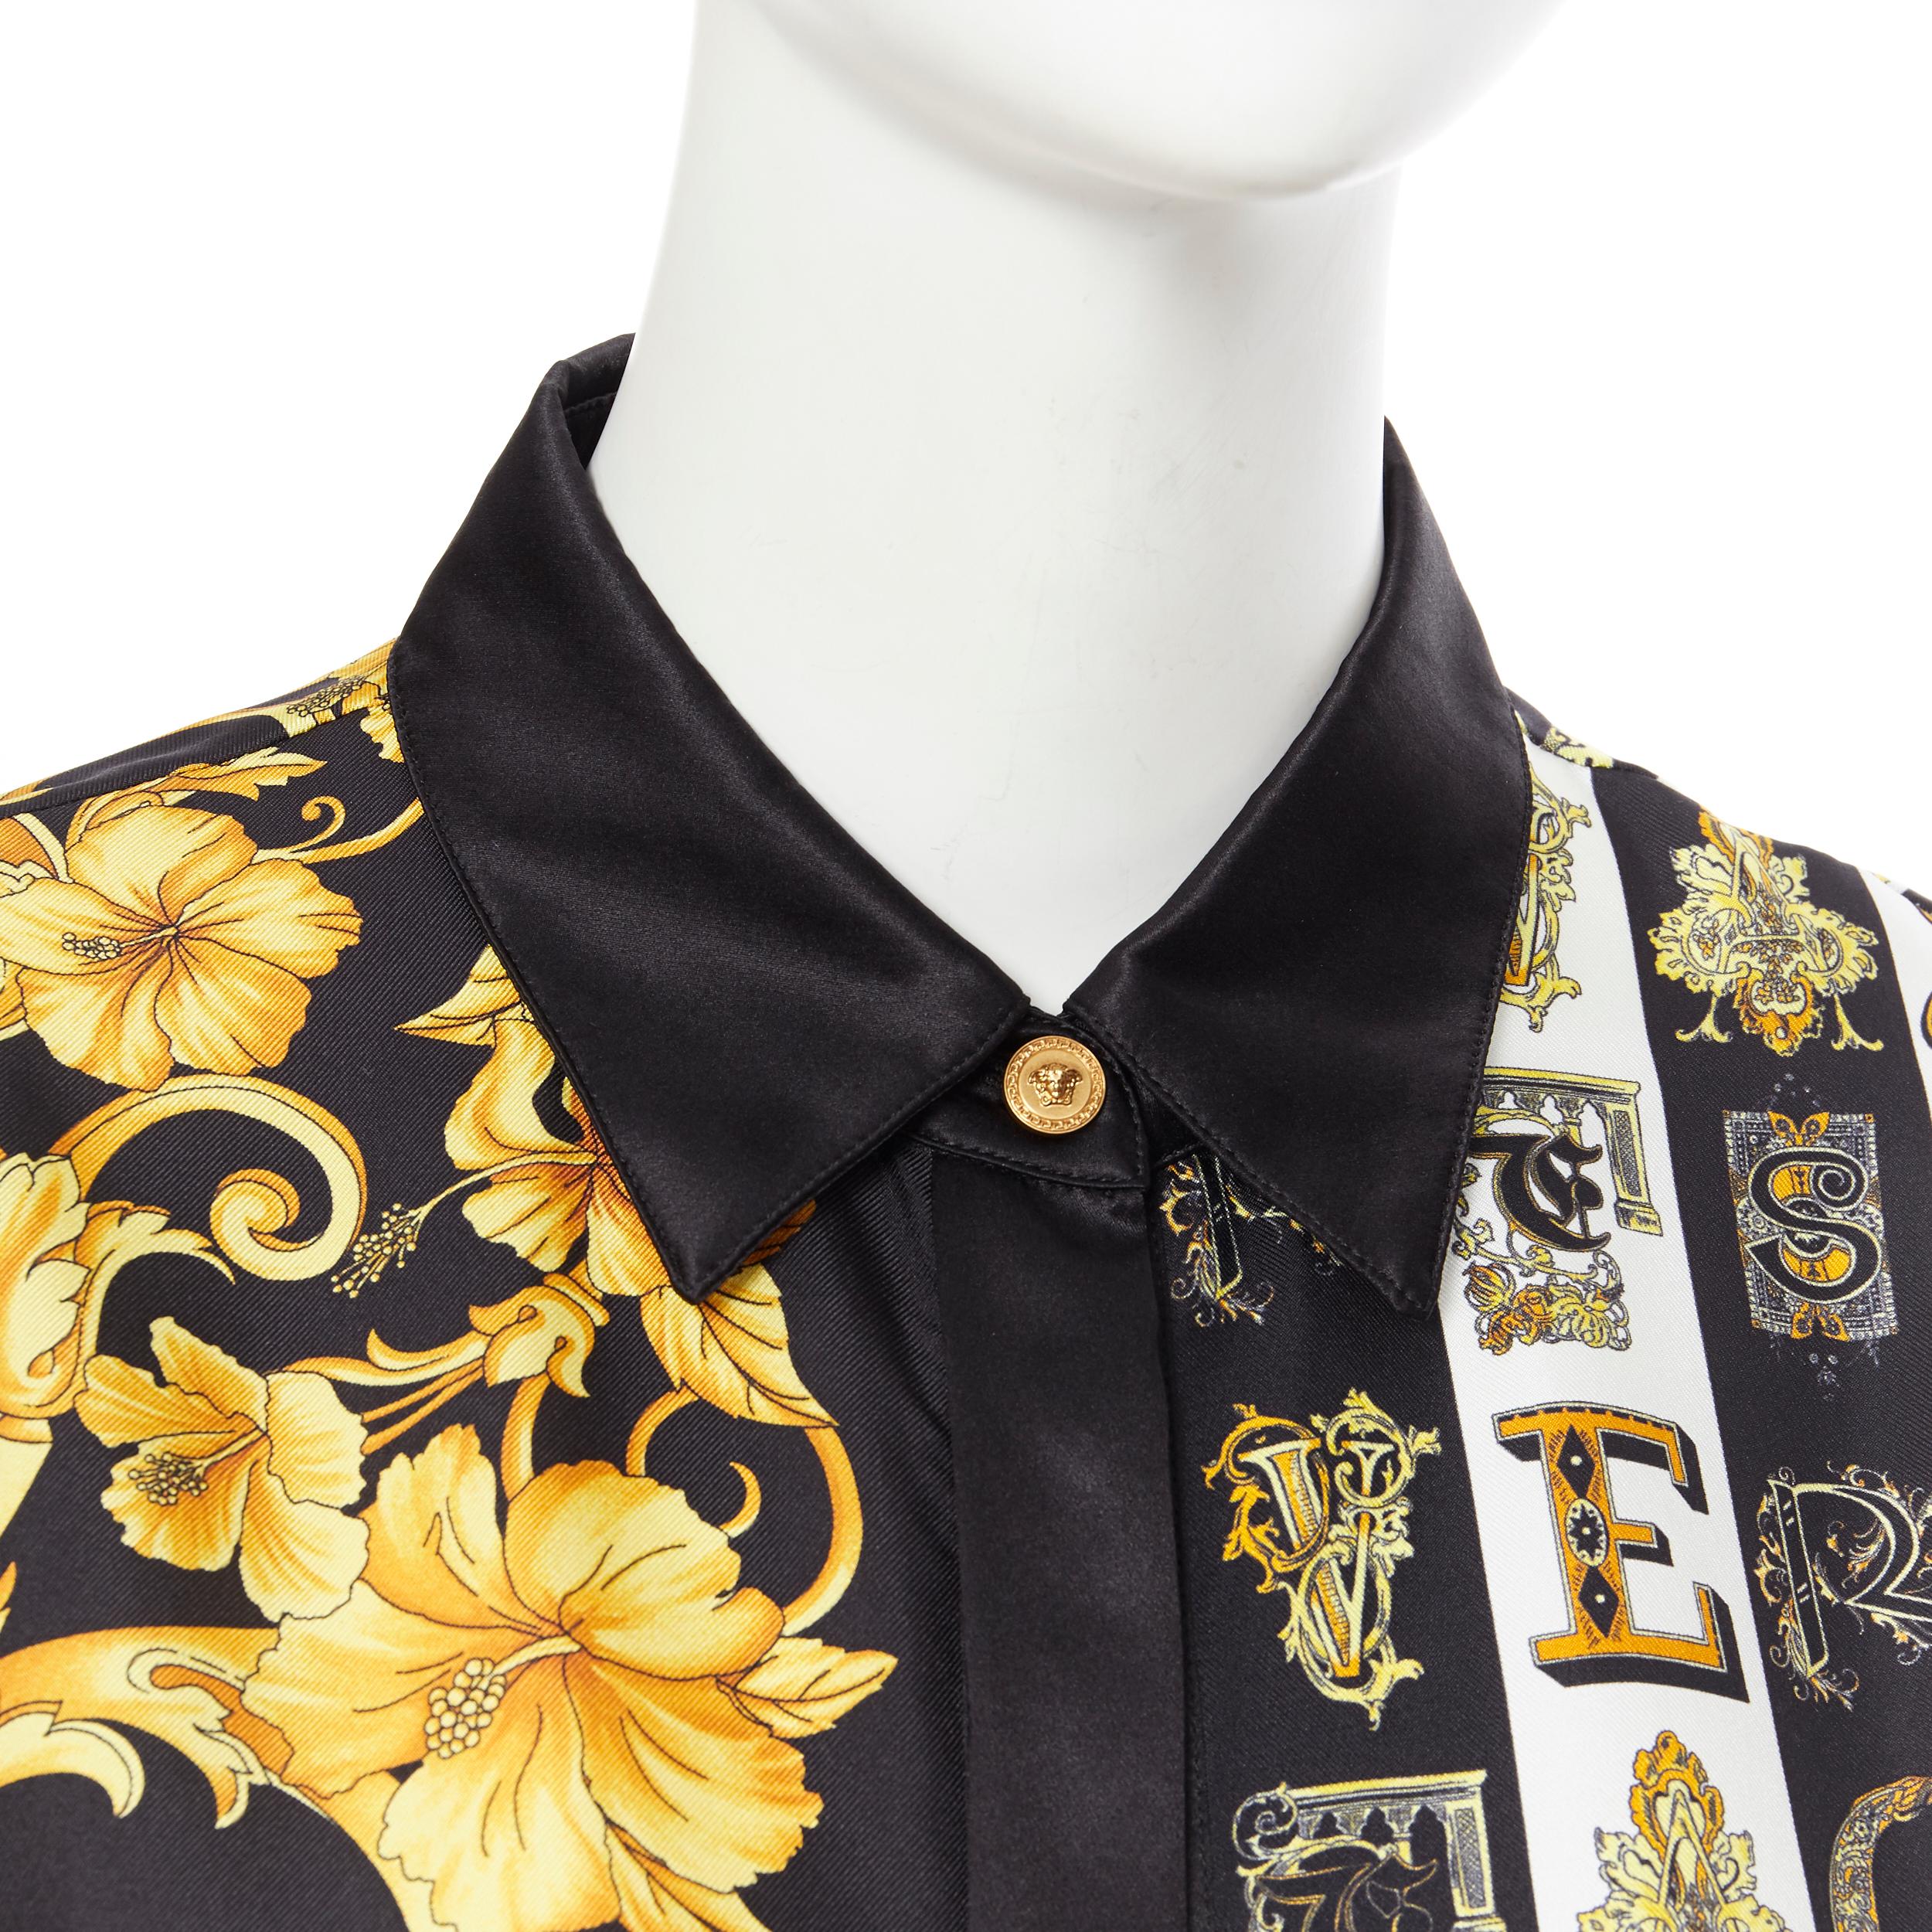 new VERSACE 100% silk gold black Hibiscus Baroque Virtus Alphabet shirt IT42 M
Brand: Versace
Designer: Donatella Versace
Collection: 2019
Model Name / Style: Silk shirt
Material: Silk
Color: Gold, black
Pattern: Floral
Closure: Button
Extra Detail: